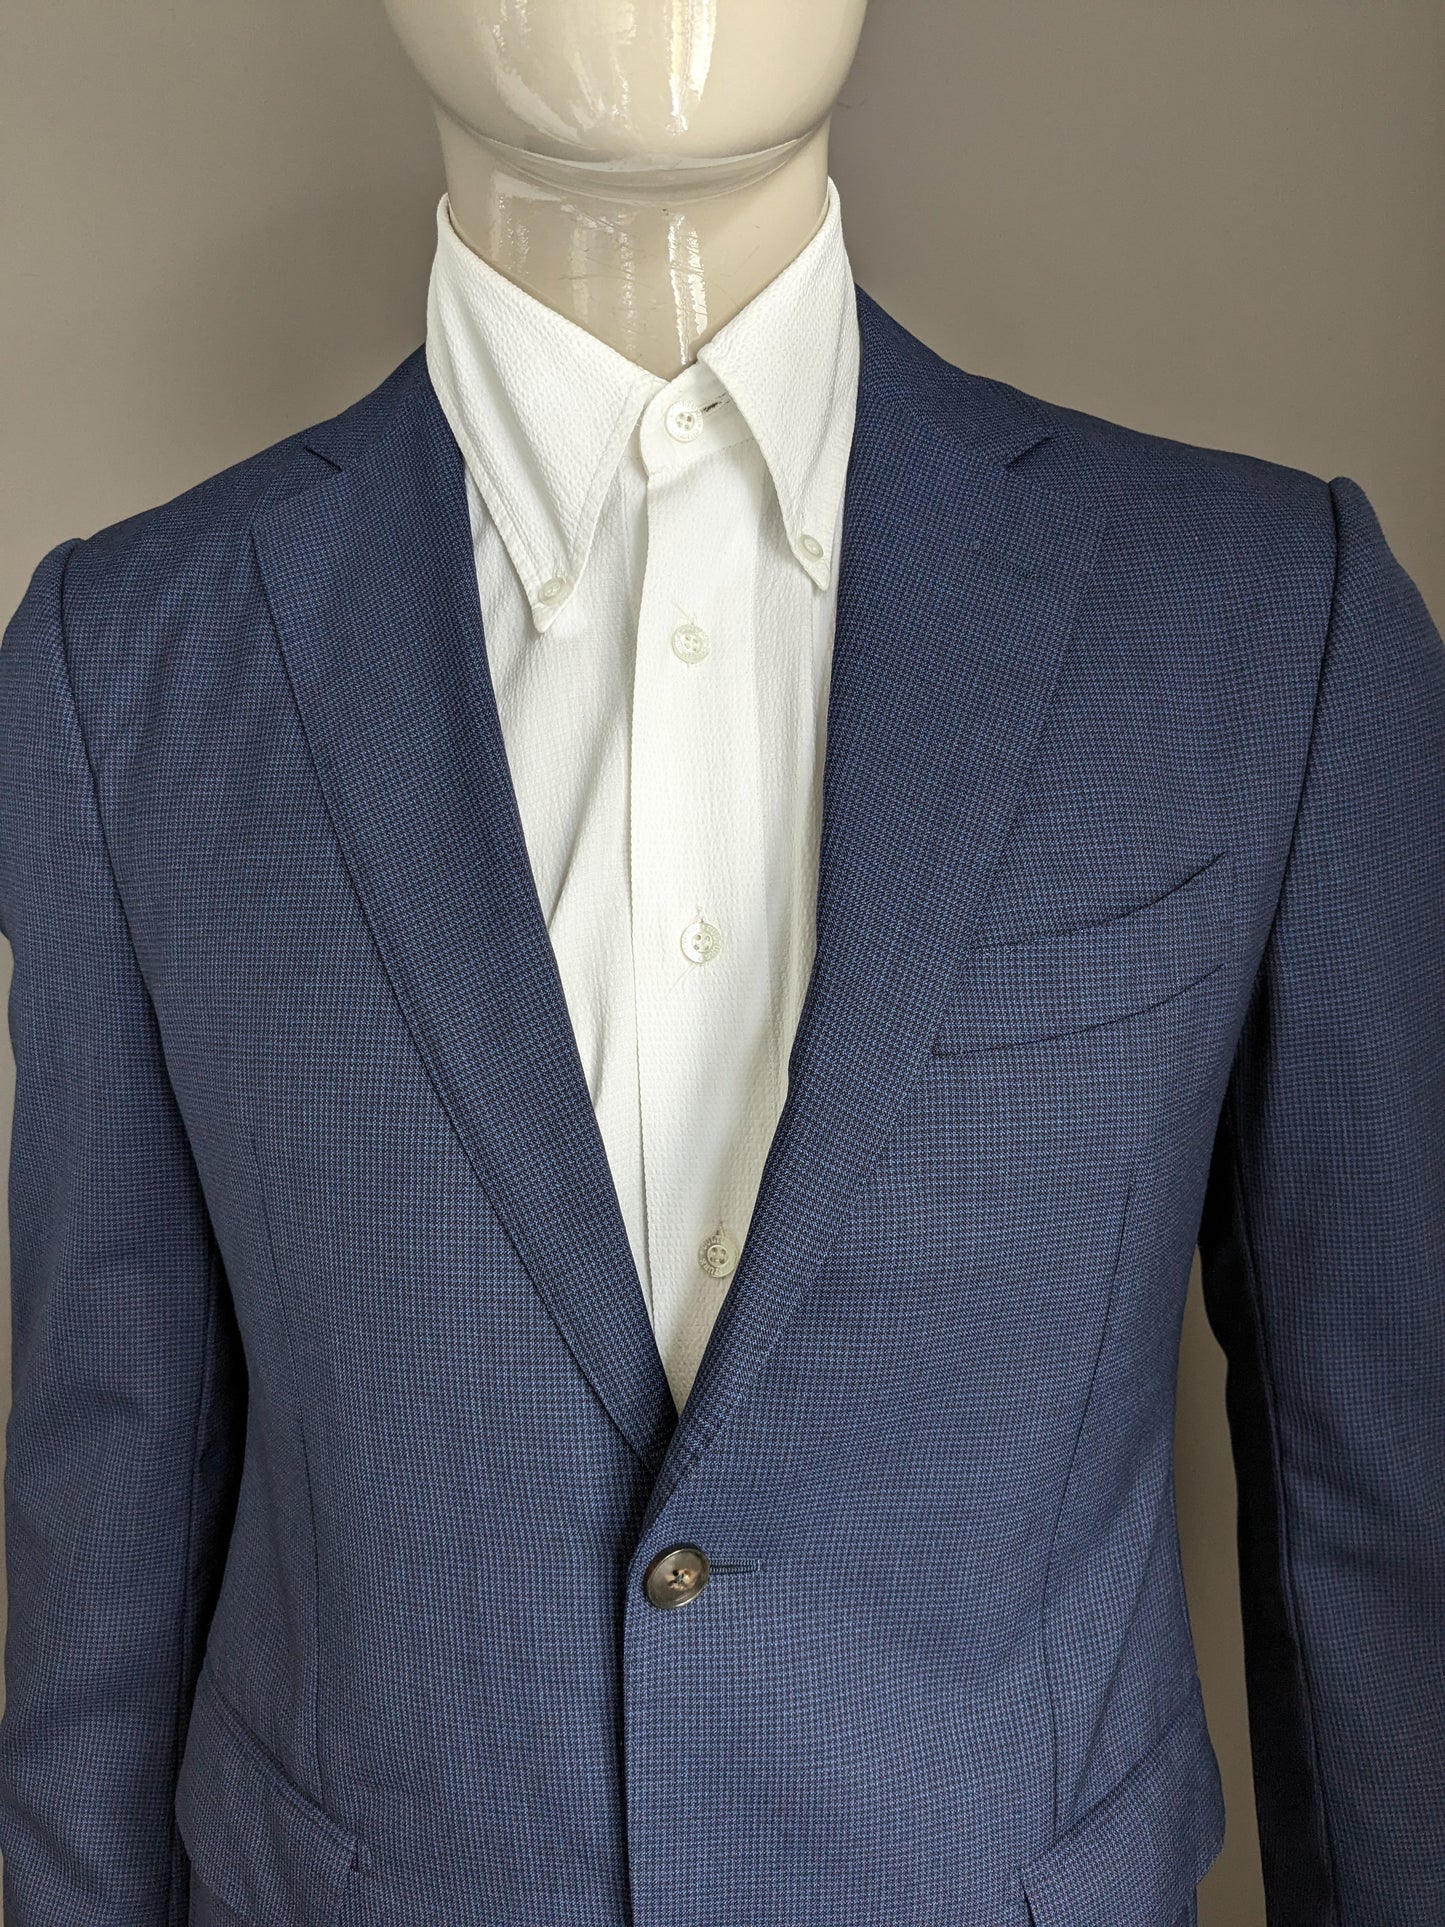 Suitsupply woolen jacket. Blue black motif. Size 48 / M.